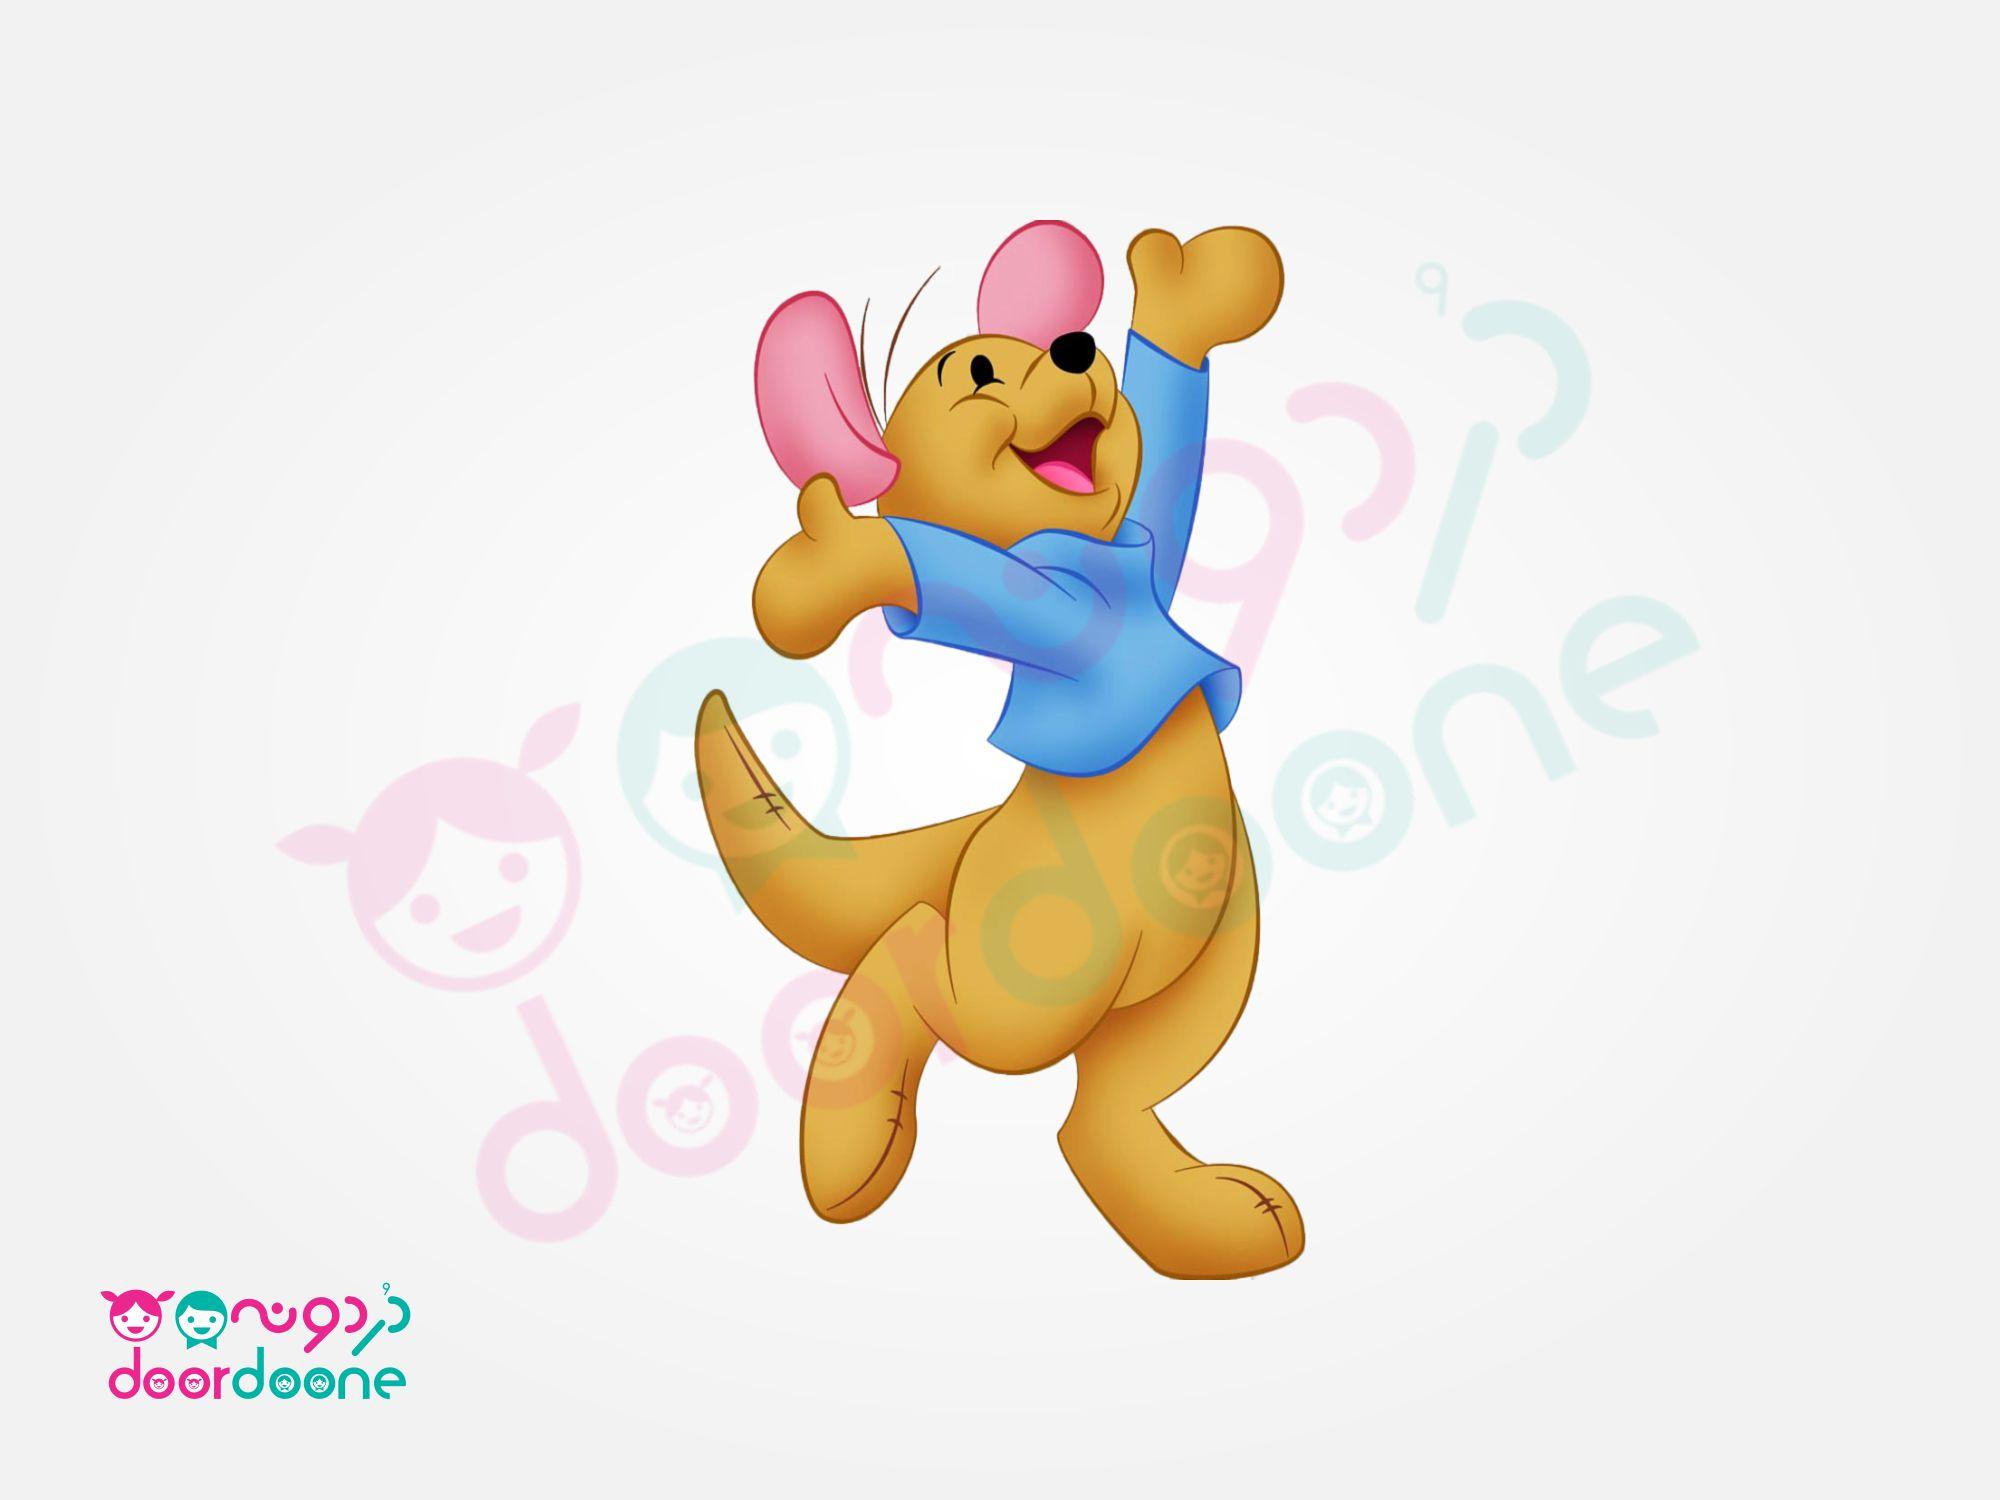 کارد و چنگال تم وينی پو (Winnie the Pooh)